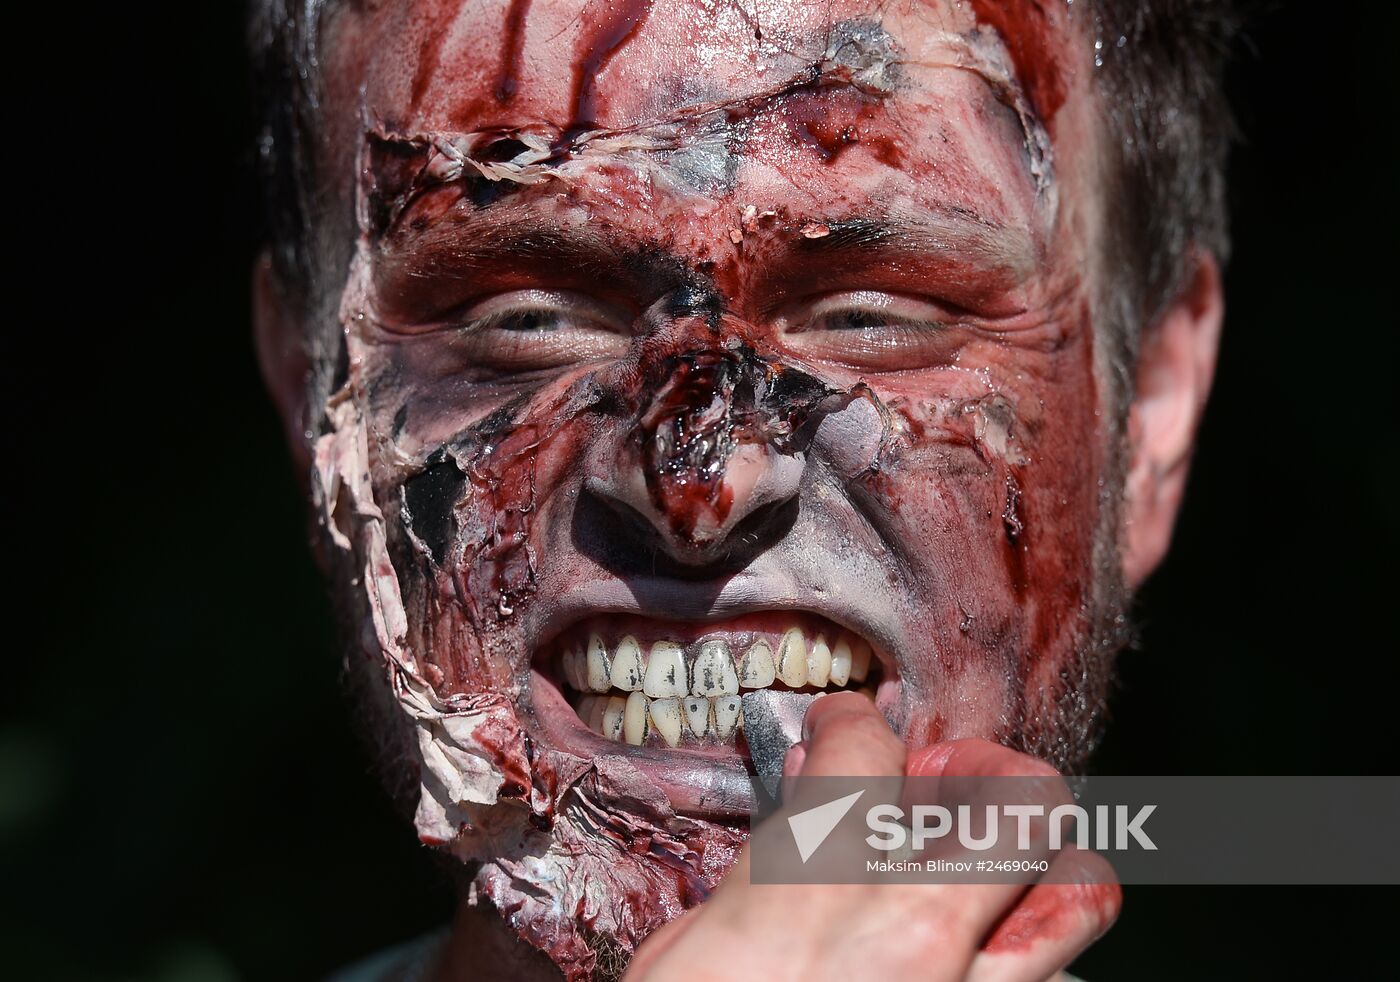 Sokolniki Park hosts Zombie Race